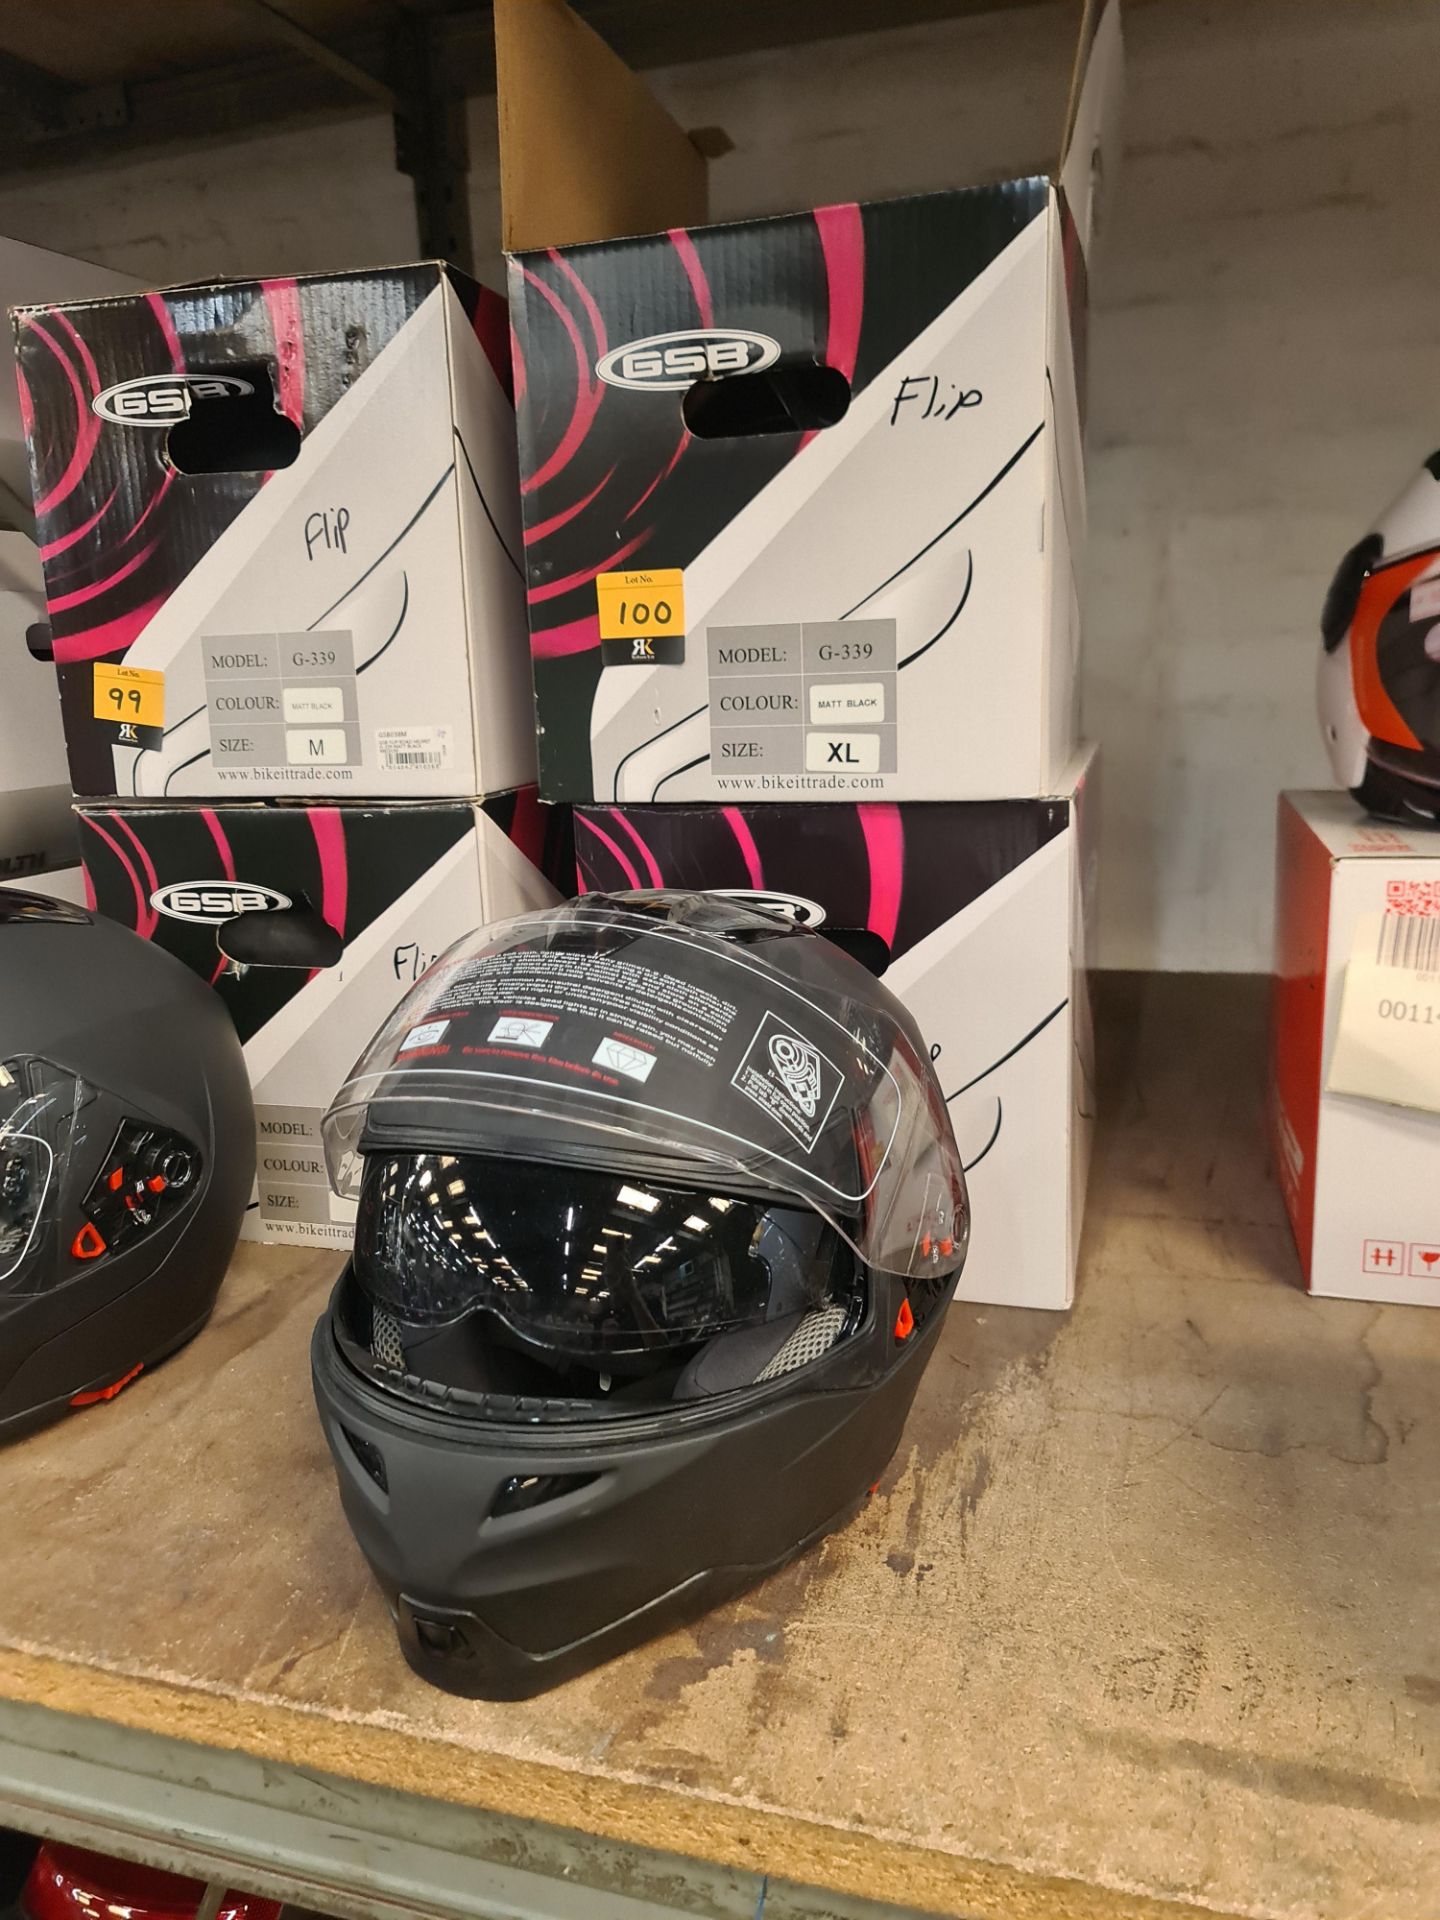 3 off GSB G339 matt black helmets, 1 each of sizes M, L & XL